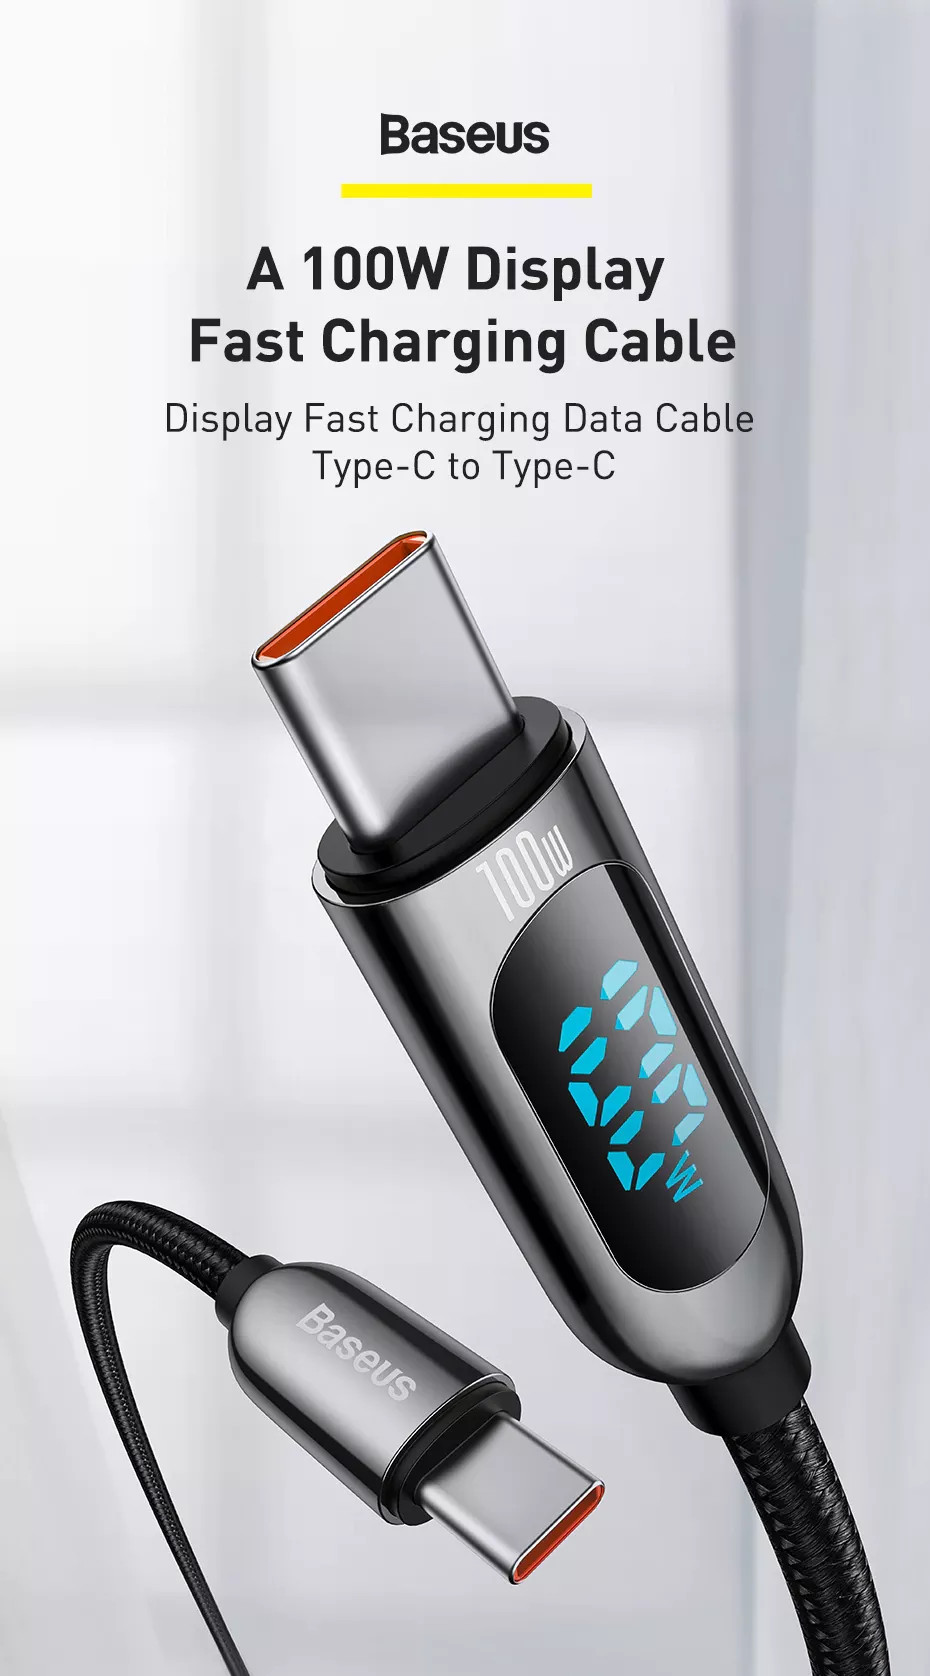 Dây cáp sạc nhanh 100W chuẩn PD 3.0 Type C to Type C hiệu Baseus Display Fast Charging Data Cable